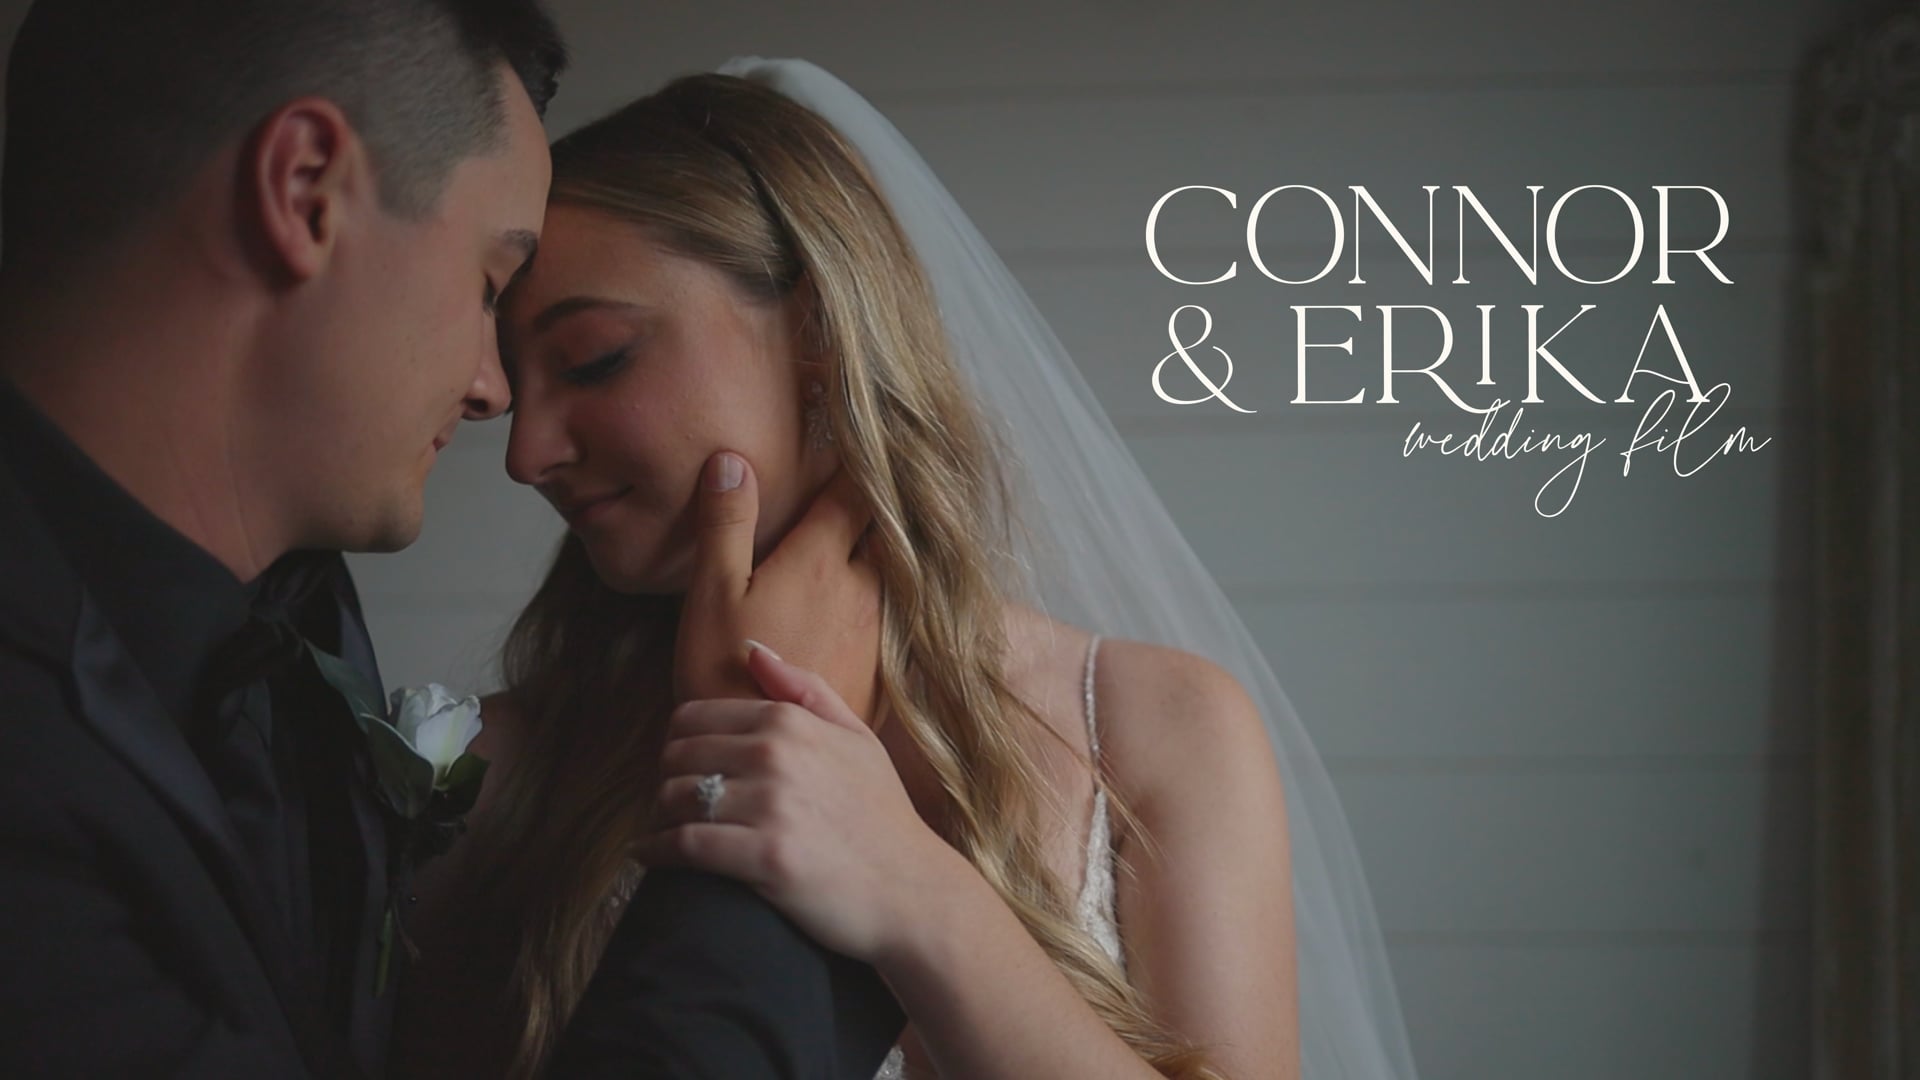 Connor & Erika Wedding Film